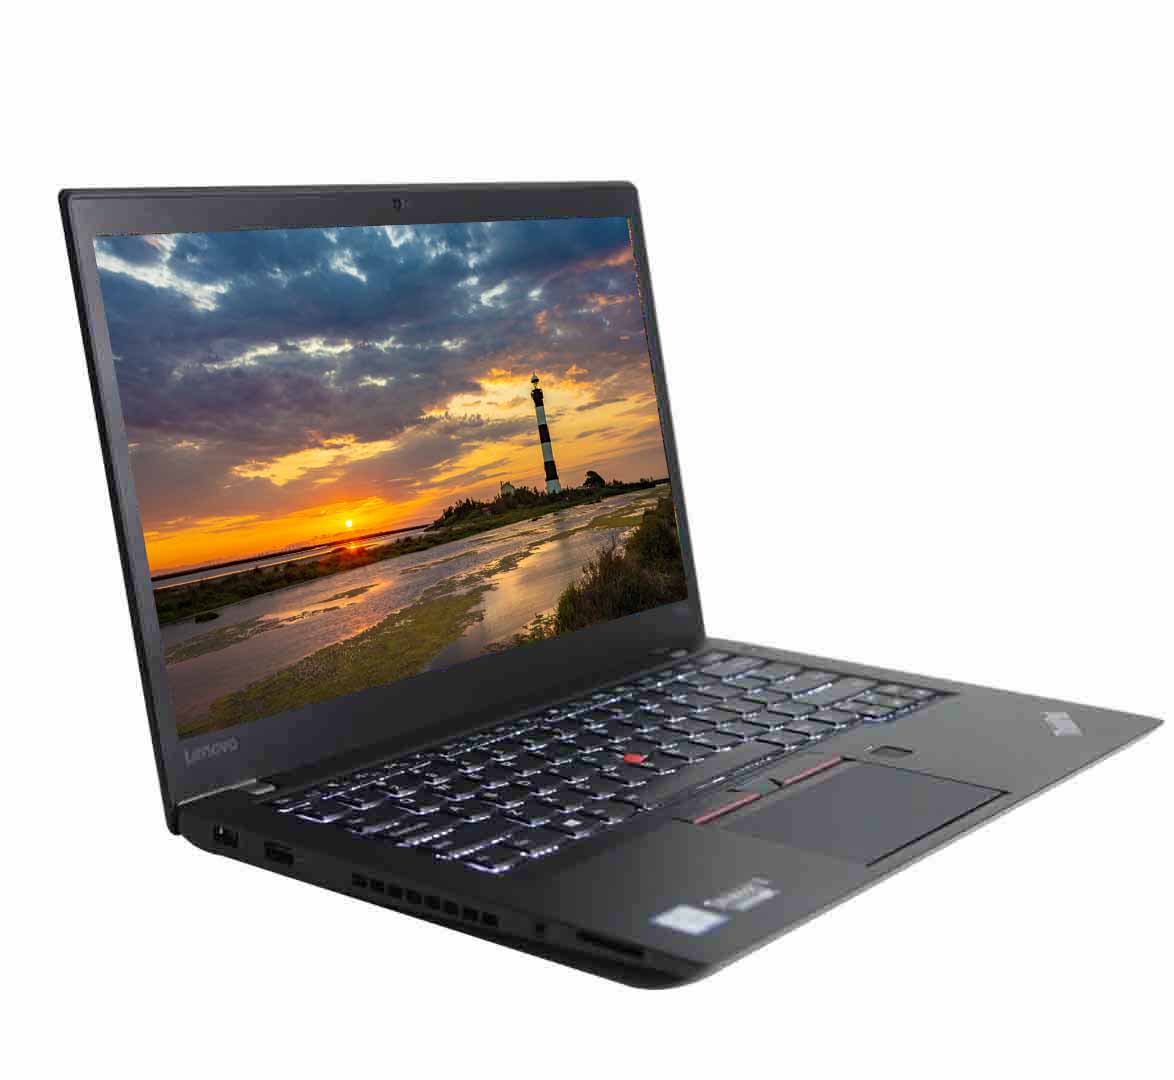 Lenovo ThinkPad T460s Ultrabook Laptop, Intel Core i5-6th Gen CPU, 8GB RAM, 512GB SSD, 14.1 inch Touchscreen, Windows 10 Pro